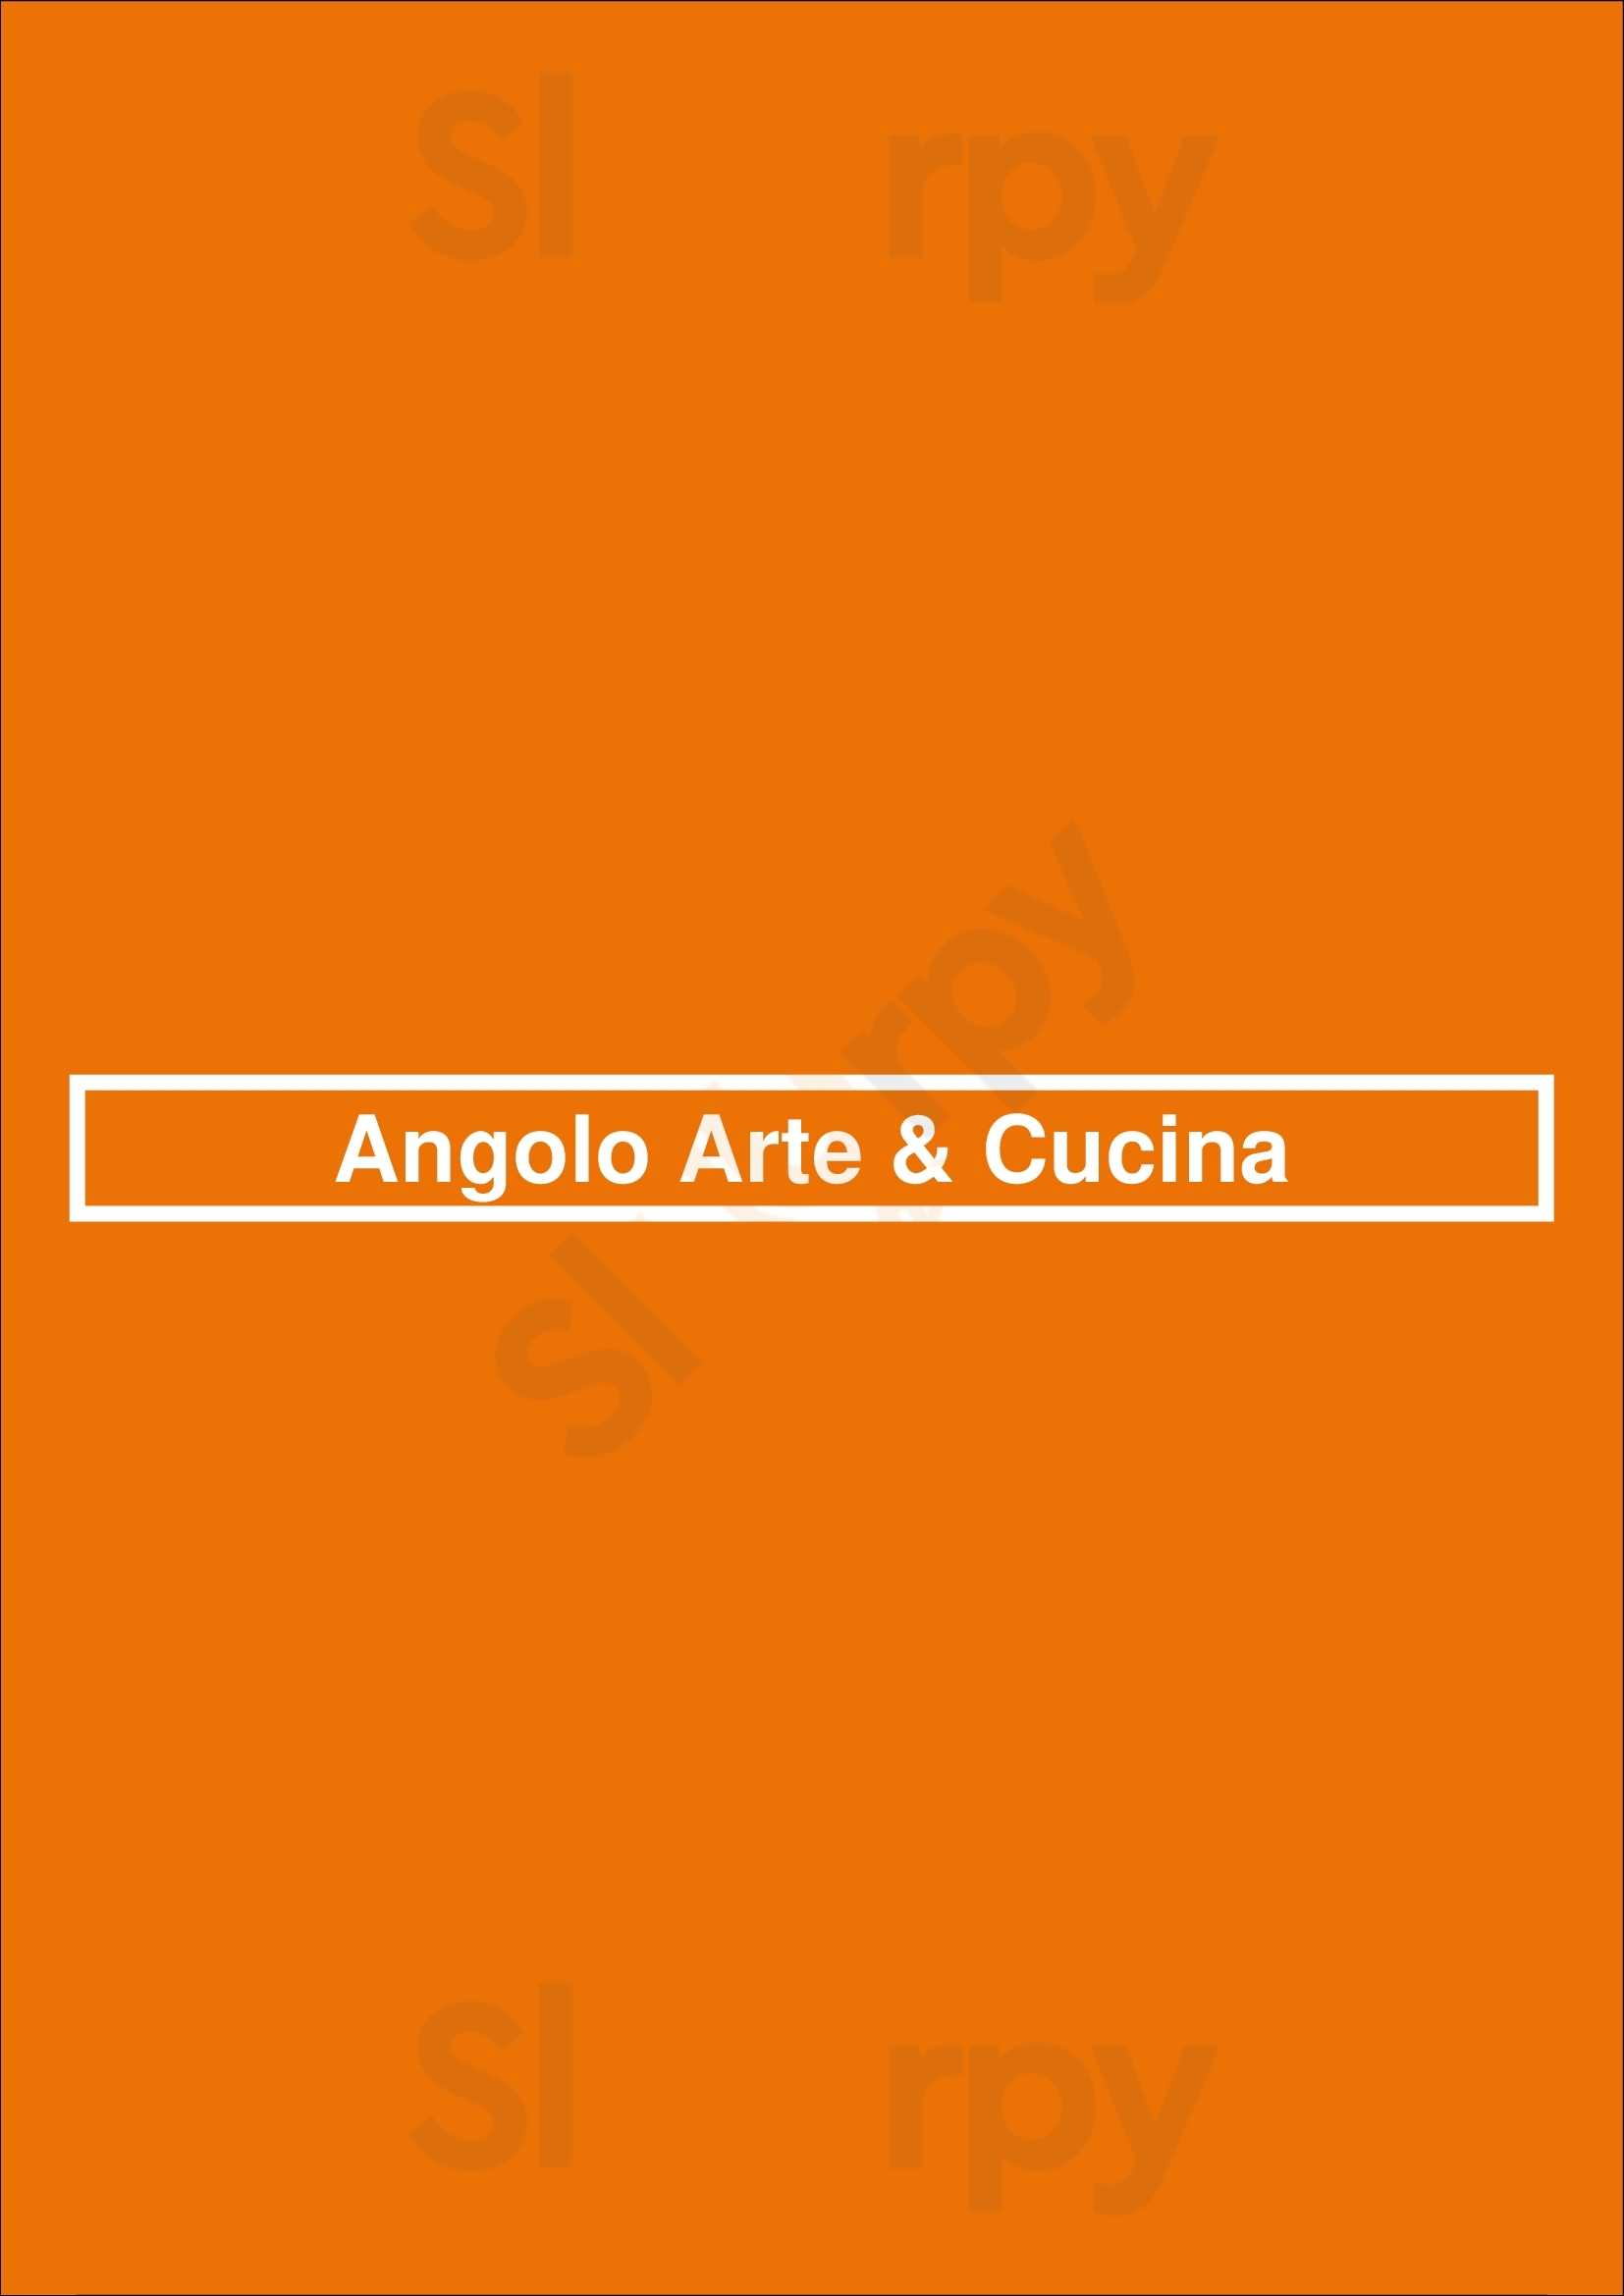 Angolo Arte & Cucina Paris Menu - 1